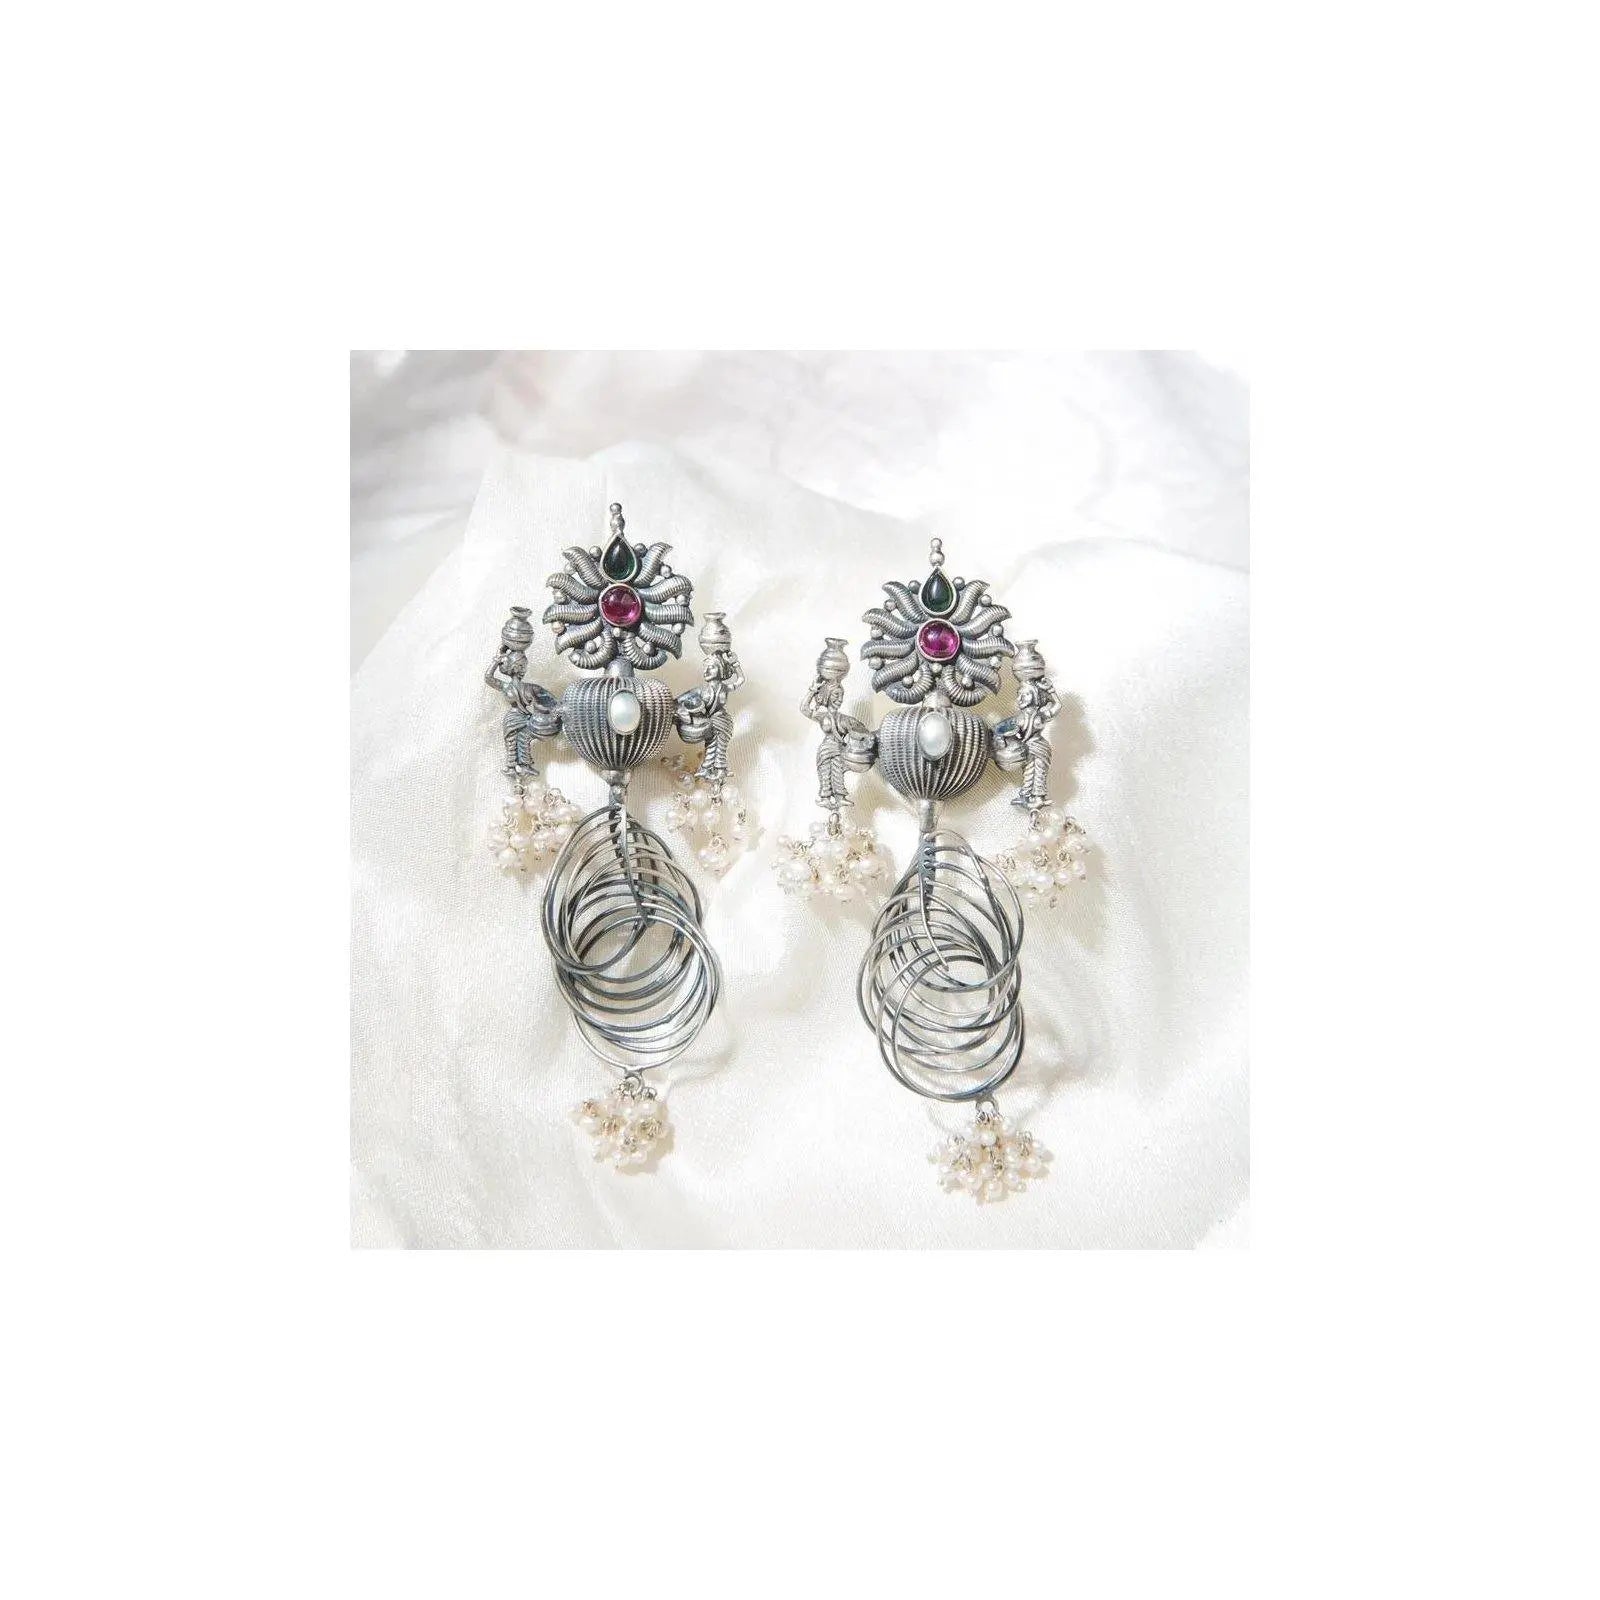 Valkyrie Silver Earrings